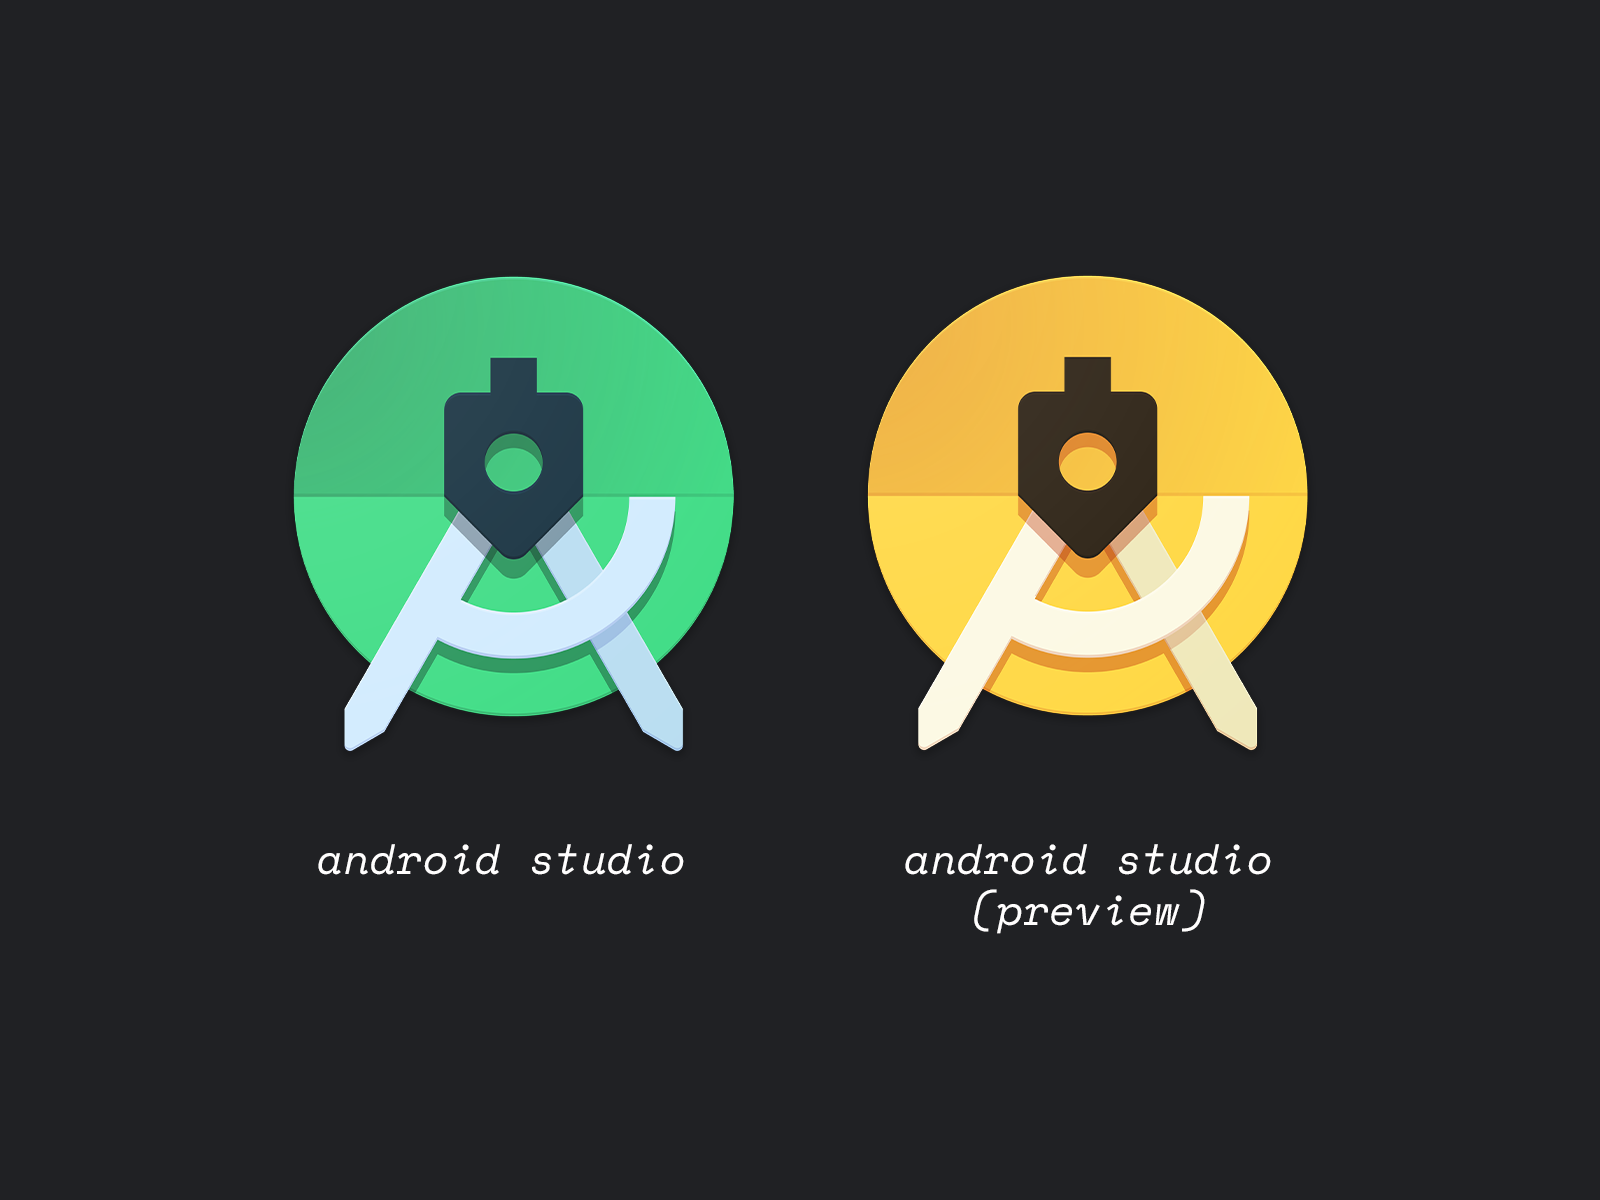 Android Studio Icons by Anmol Govinda Rao on Dribbble